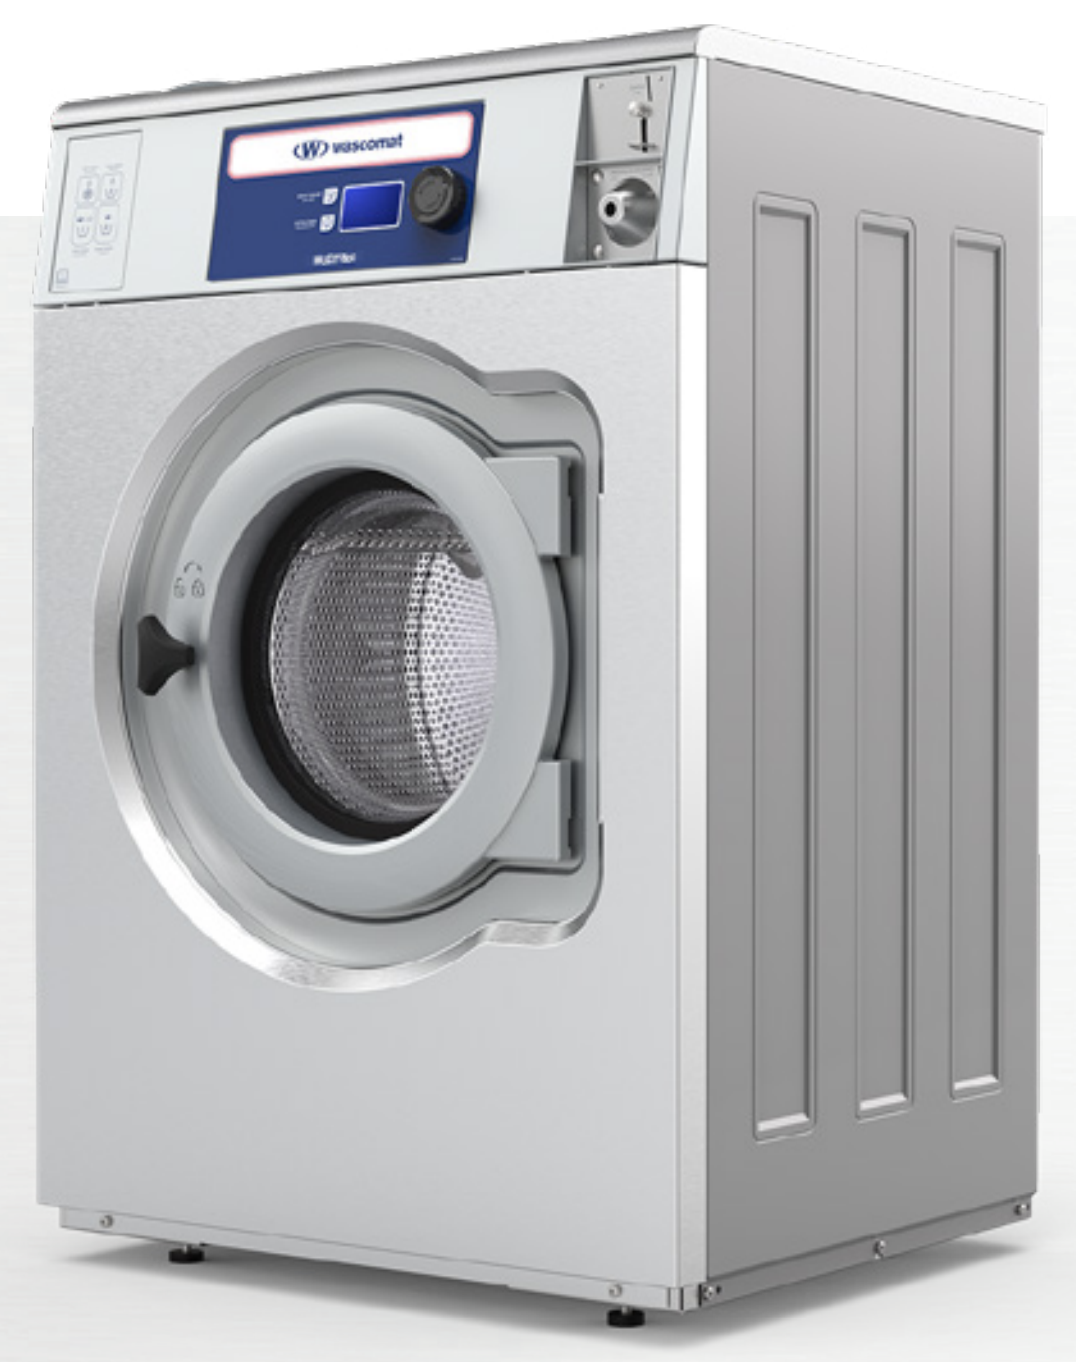 New 2022 Wascomat Wud775 - Automatic Laundry Service Of Va, Inc.